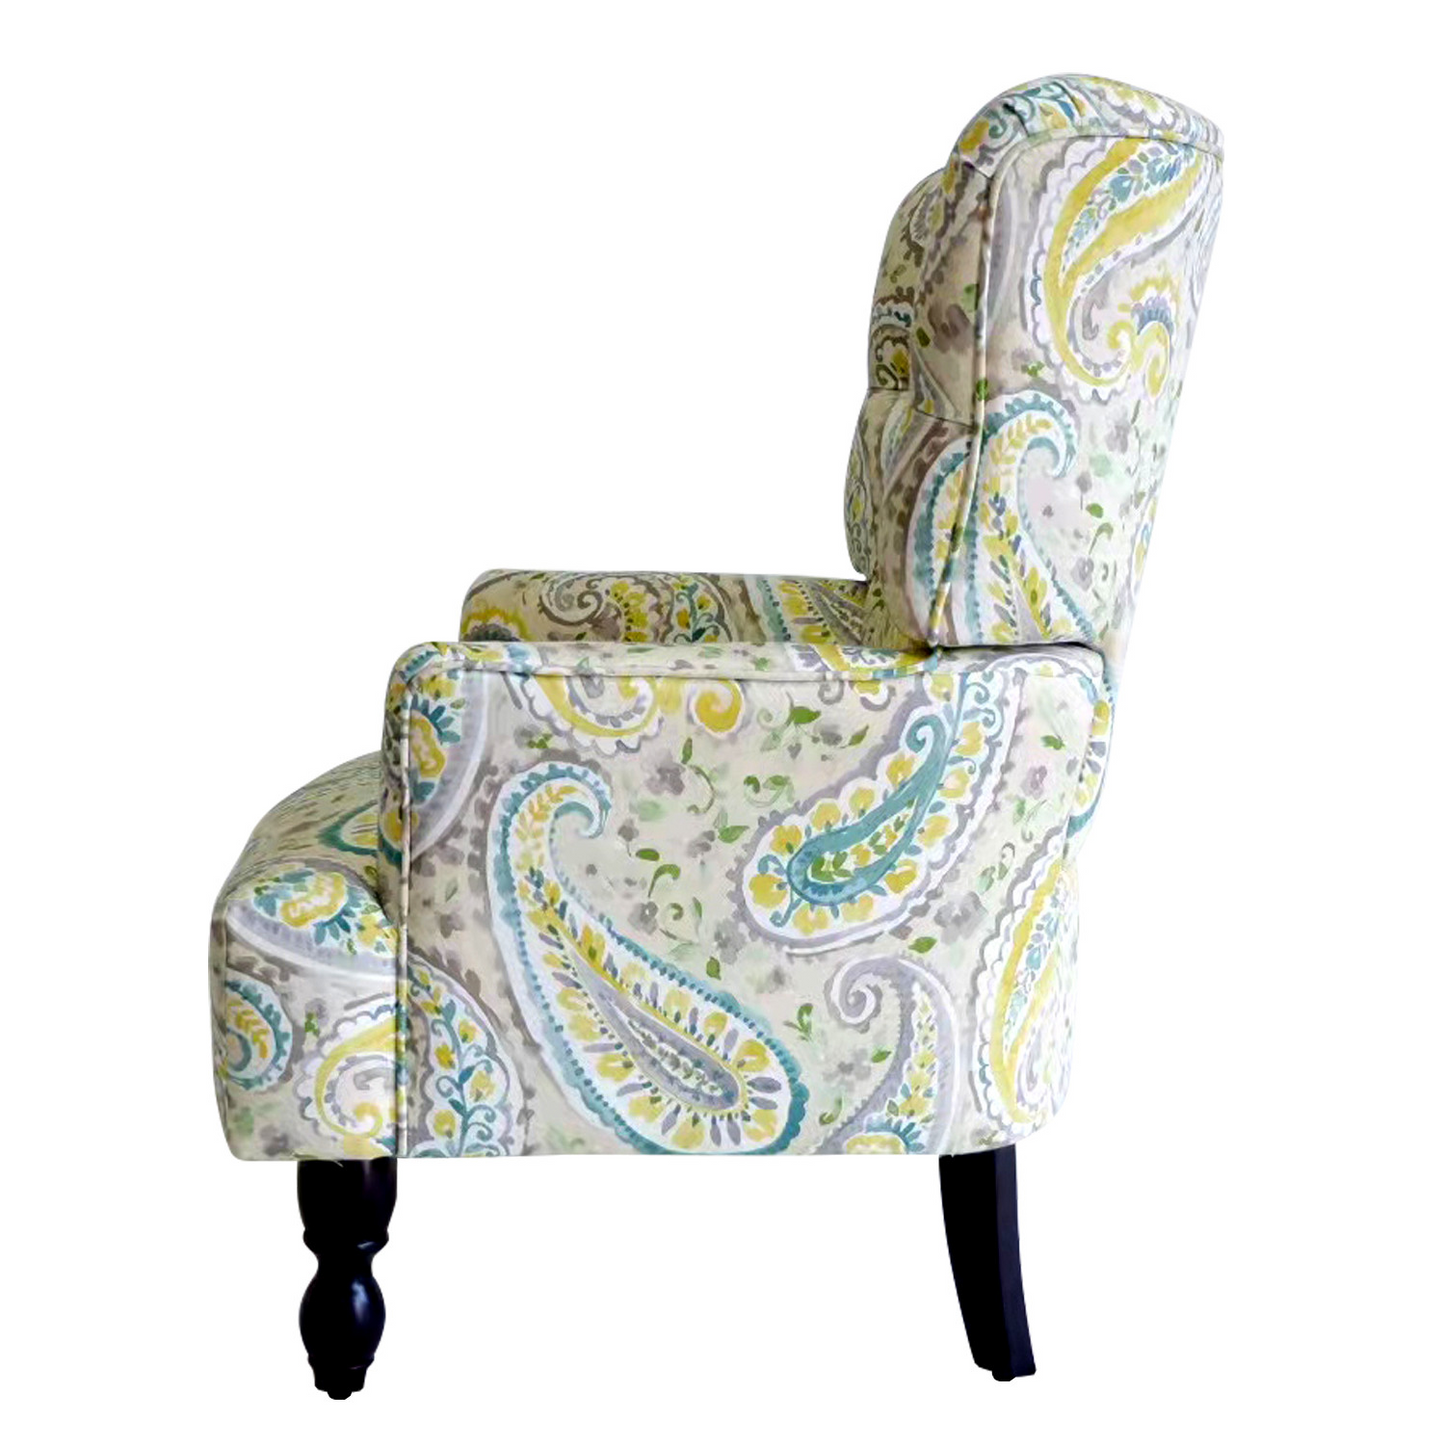 "28"" Aqua Lemongrass And Brown Polyester Blend Paisley Arm Chair"